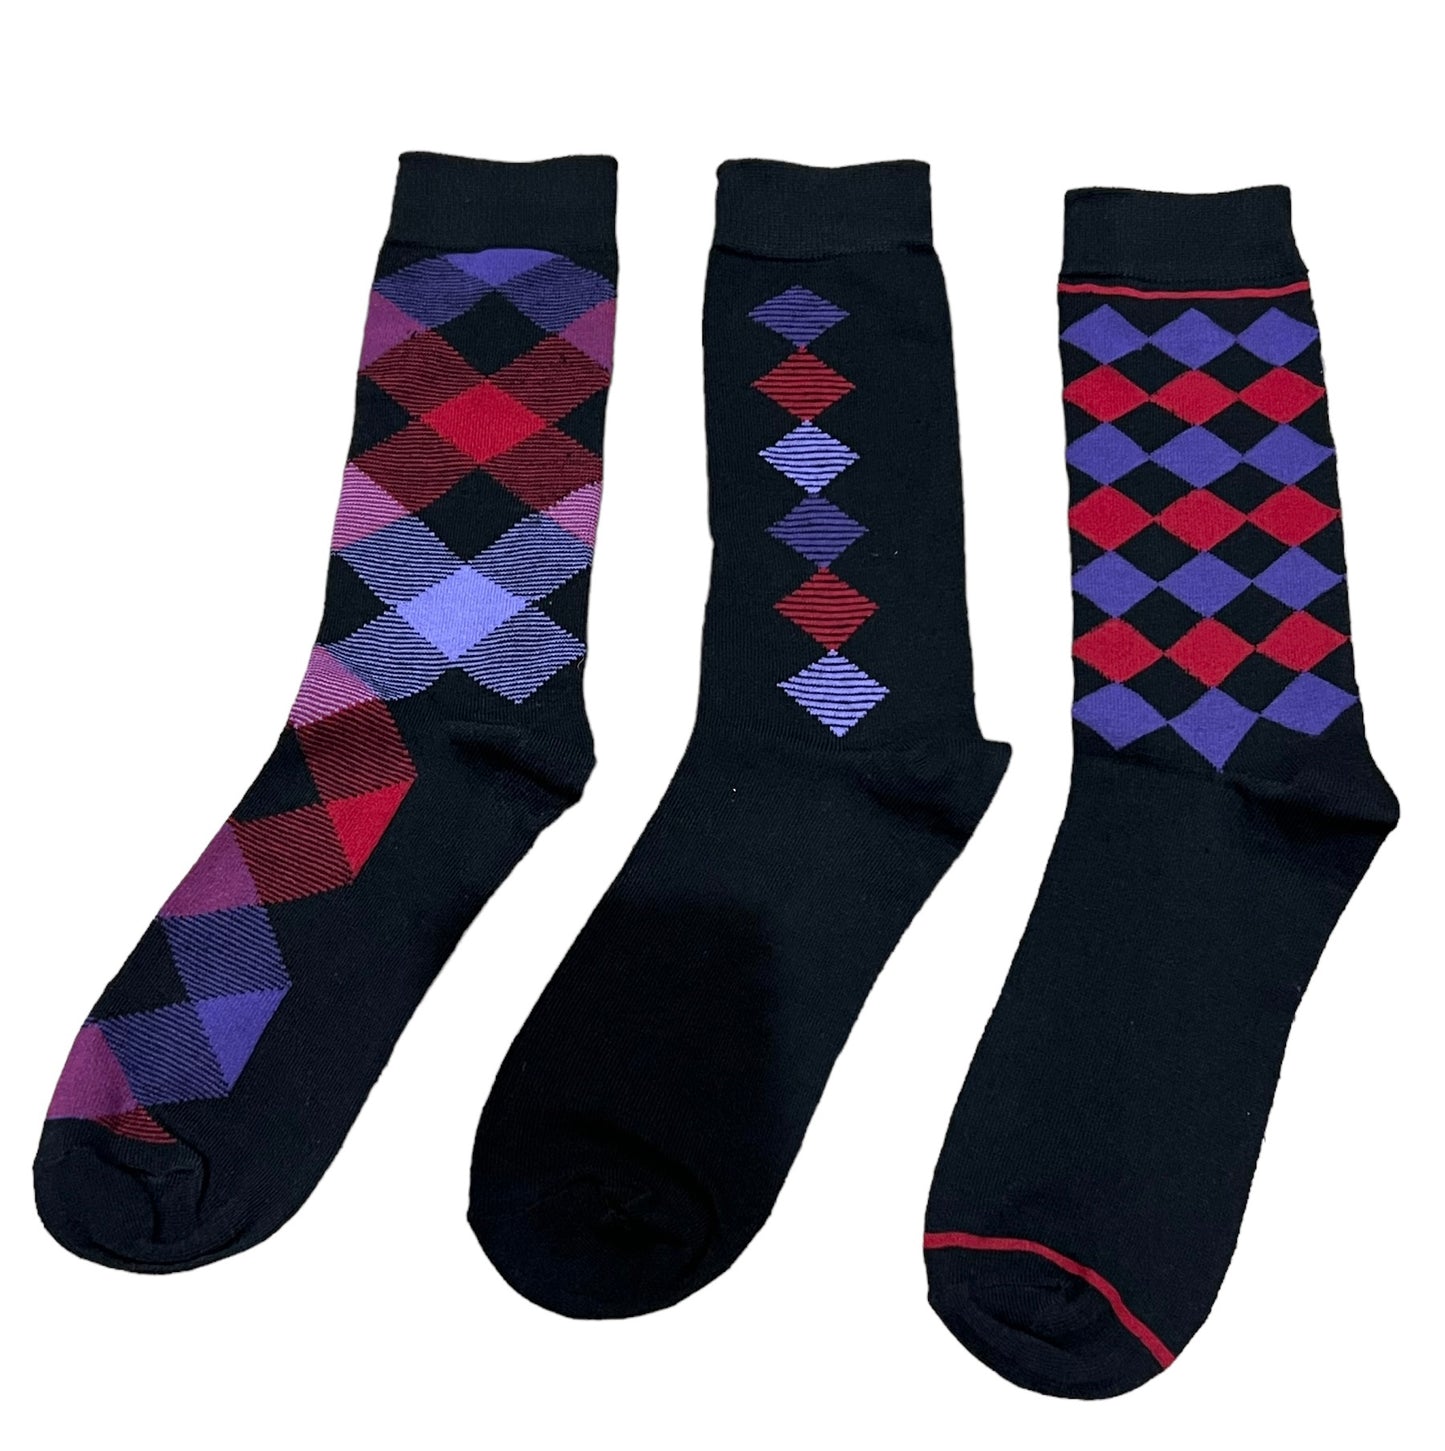 Argyle Assortment Fashion Socks in Black 3pr Pack